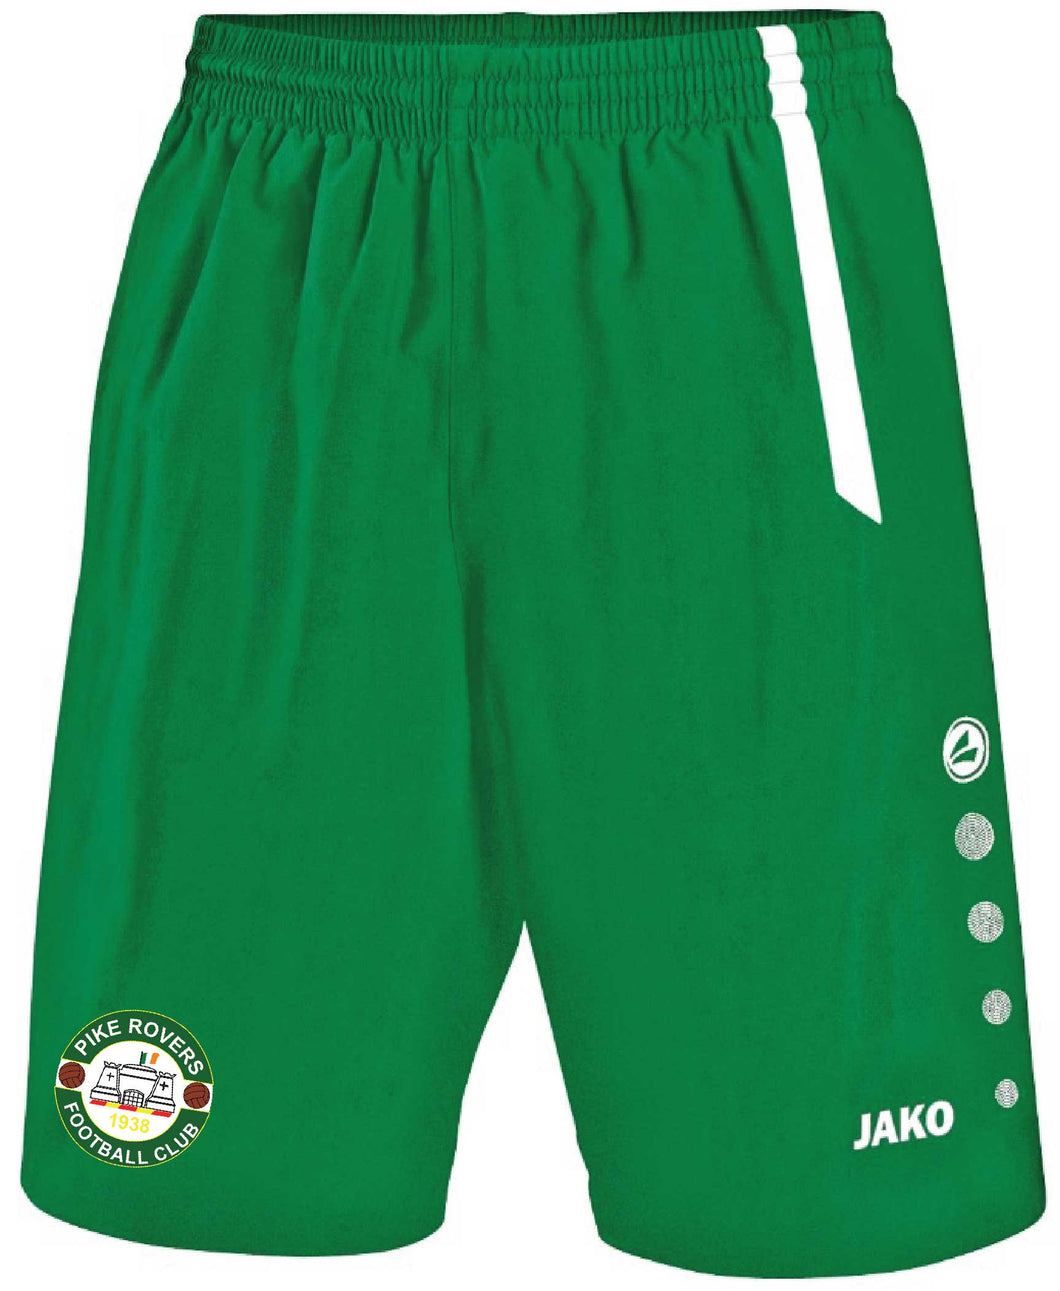 Adult JAKO Pike Rovers Shorts Turin PR4462